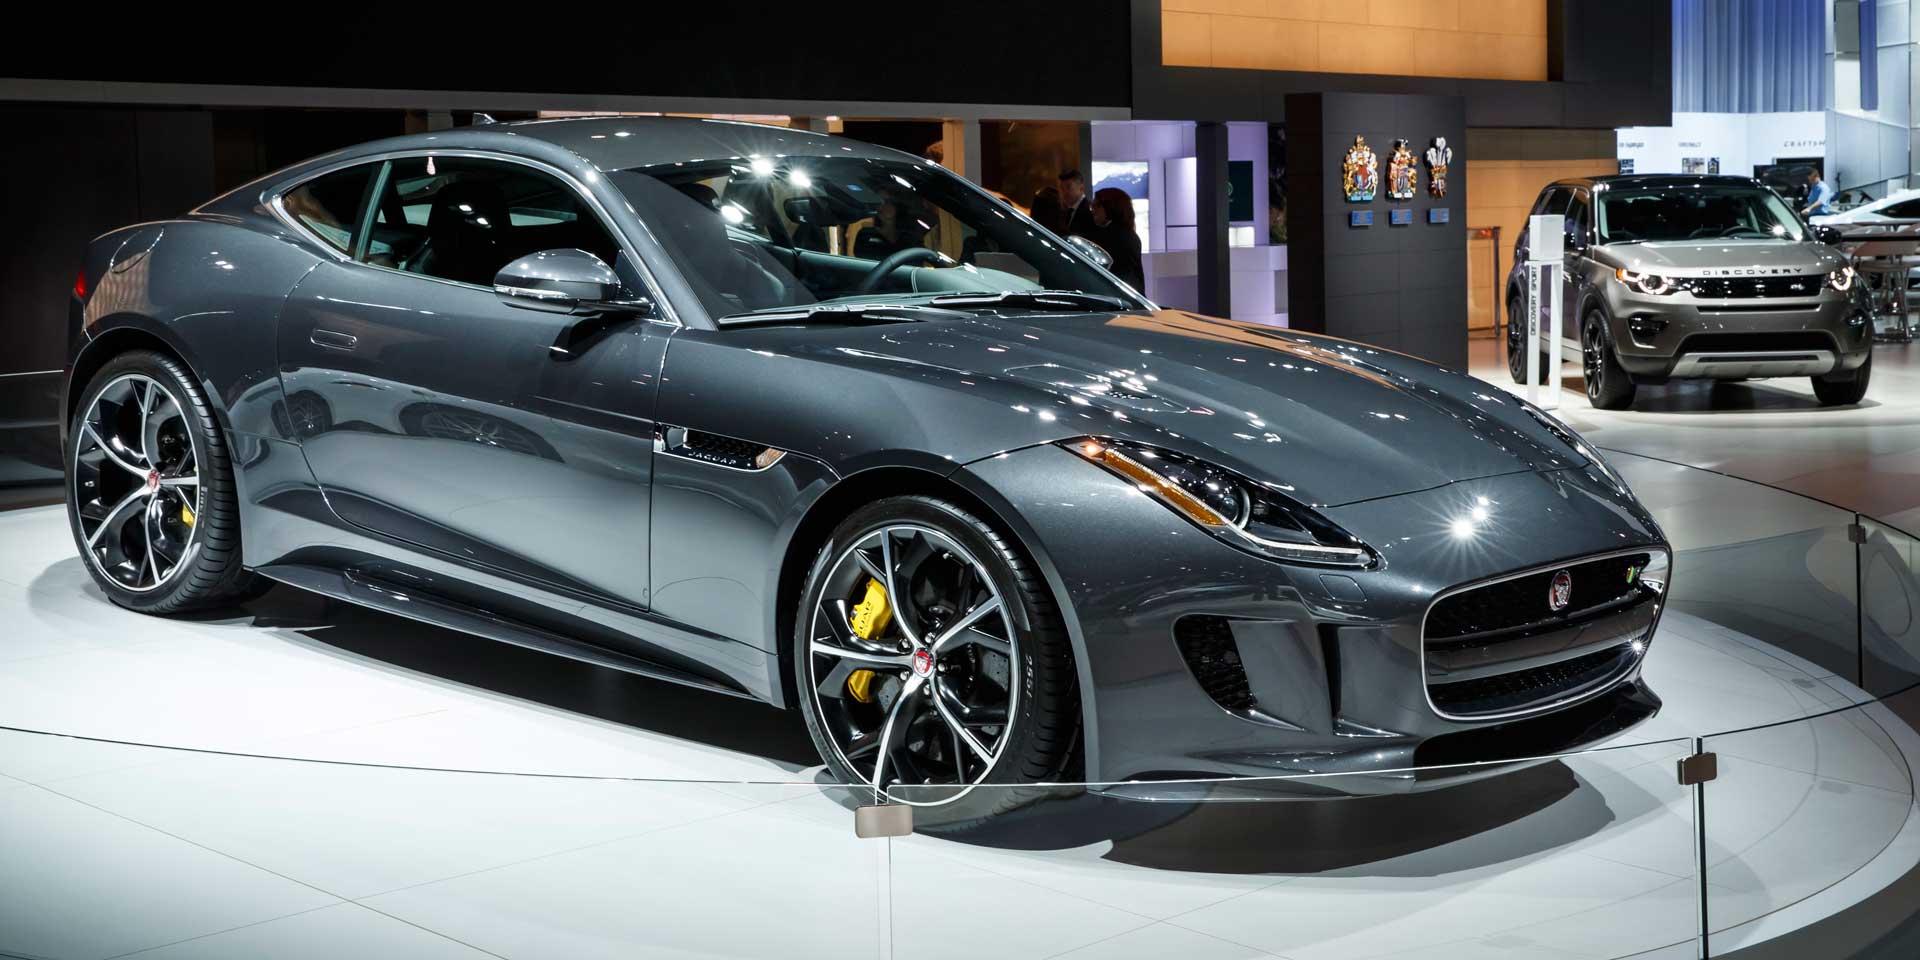 2016 - Jaguar - F-Type - Vehicles on Display | Chicago ...